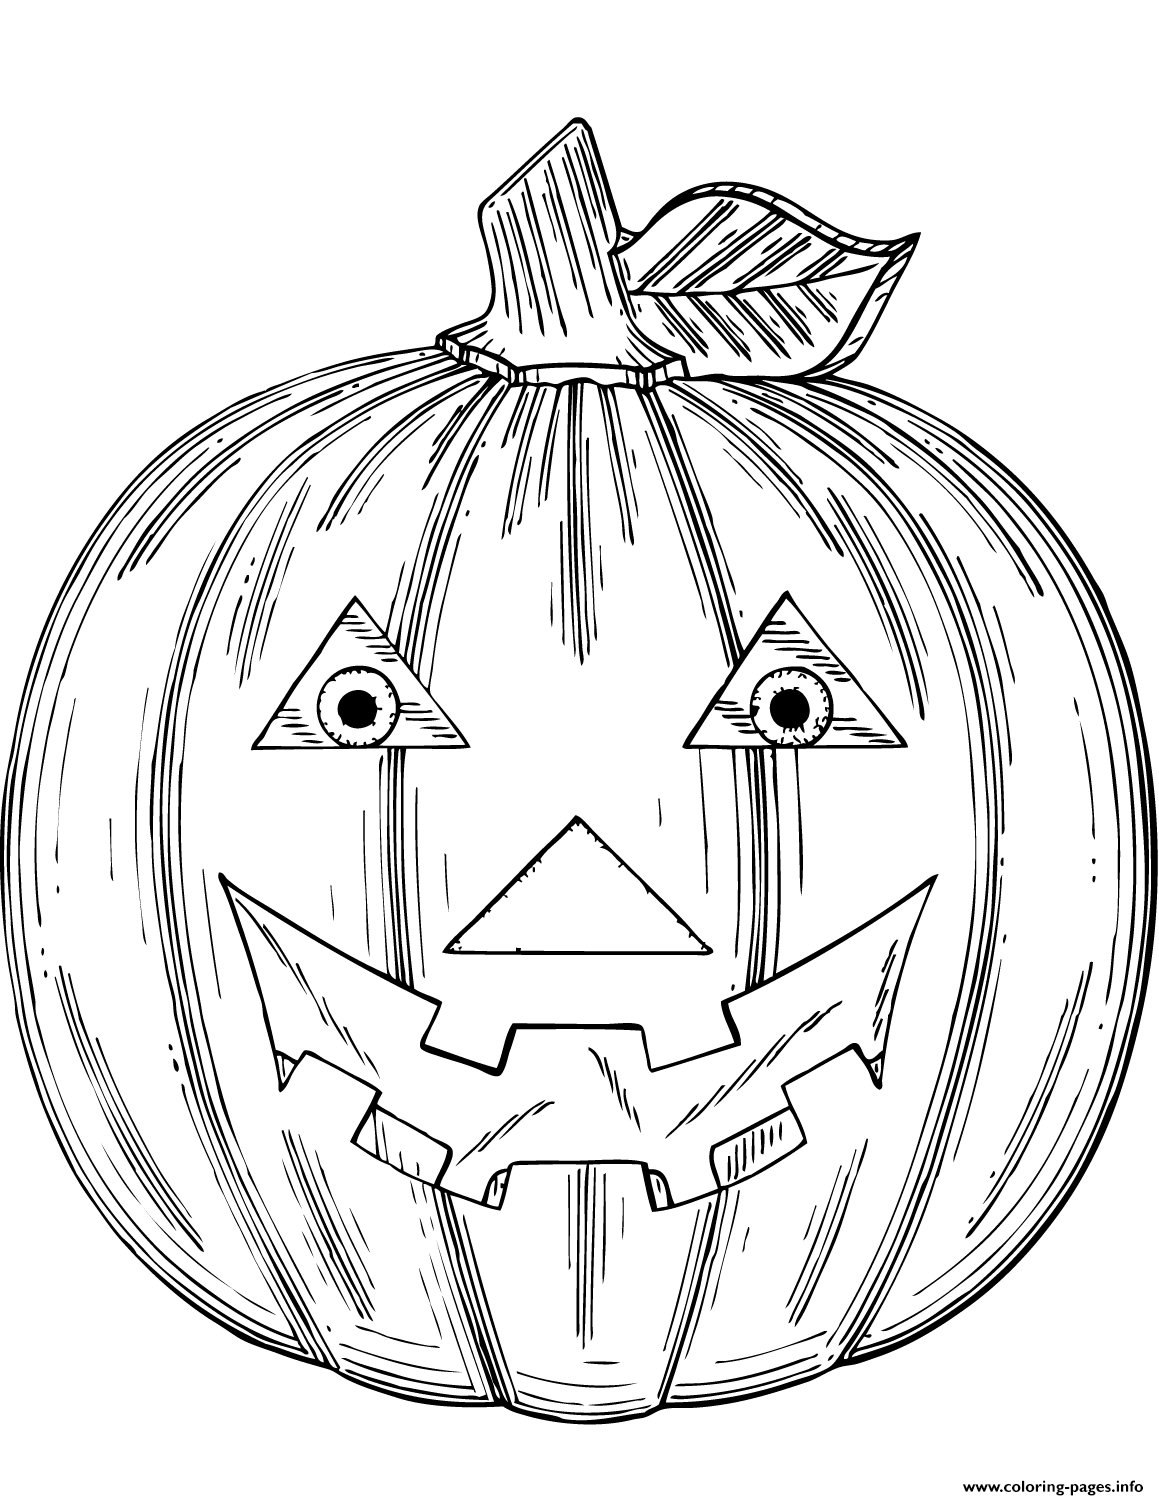 Jack O Lantern Halloween coloring